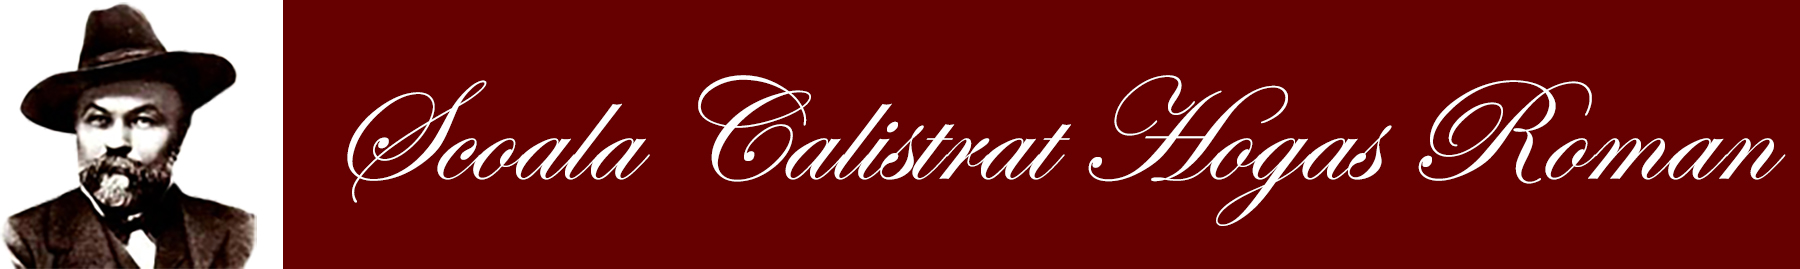 Logo Scoala Calistrat Hogas Roman